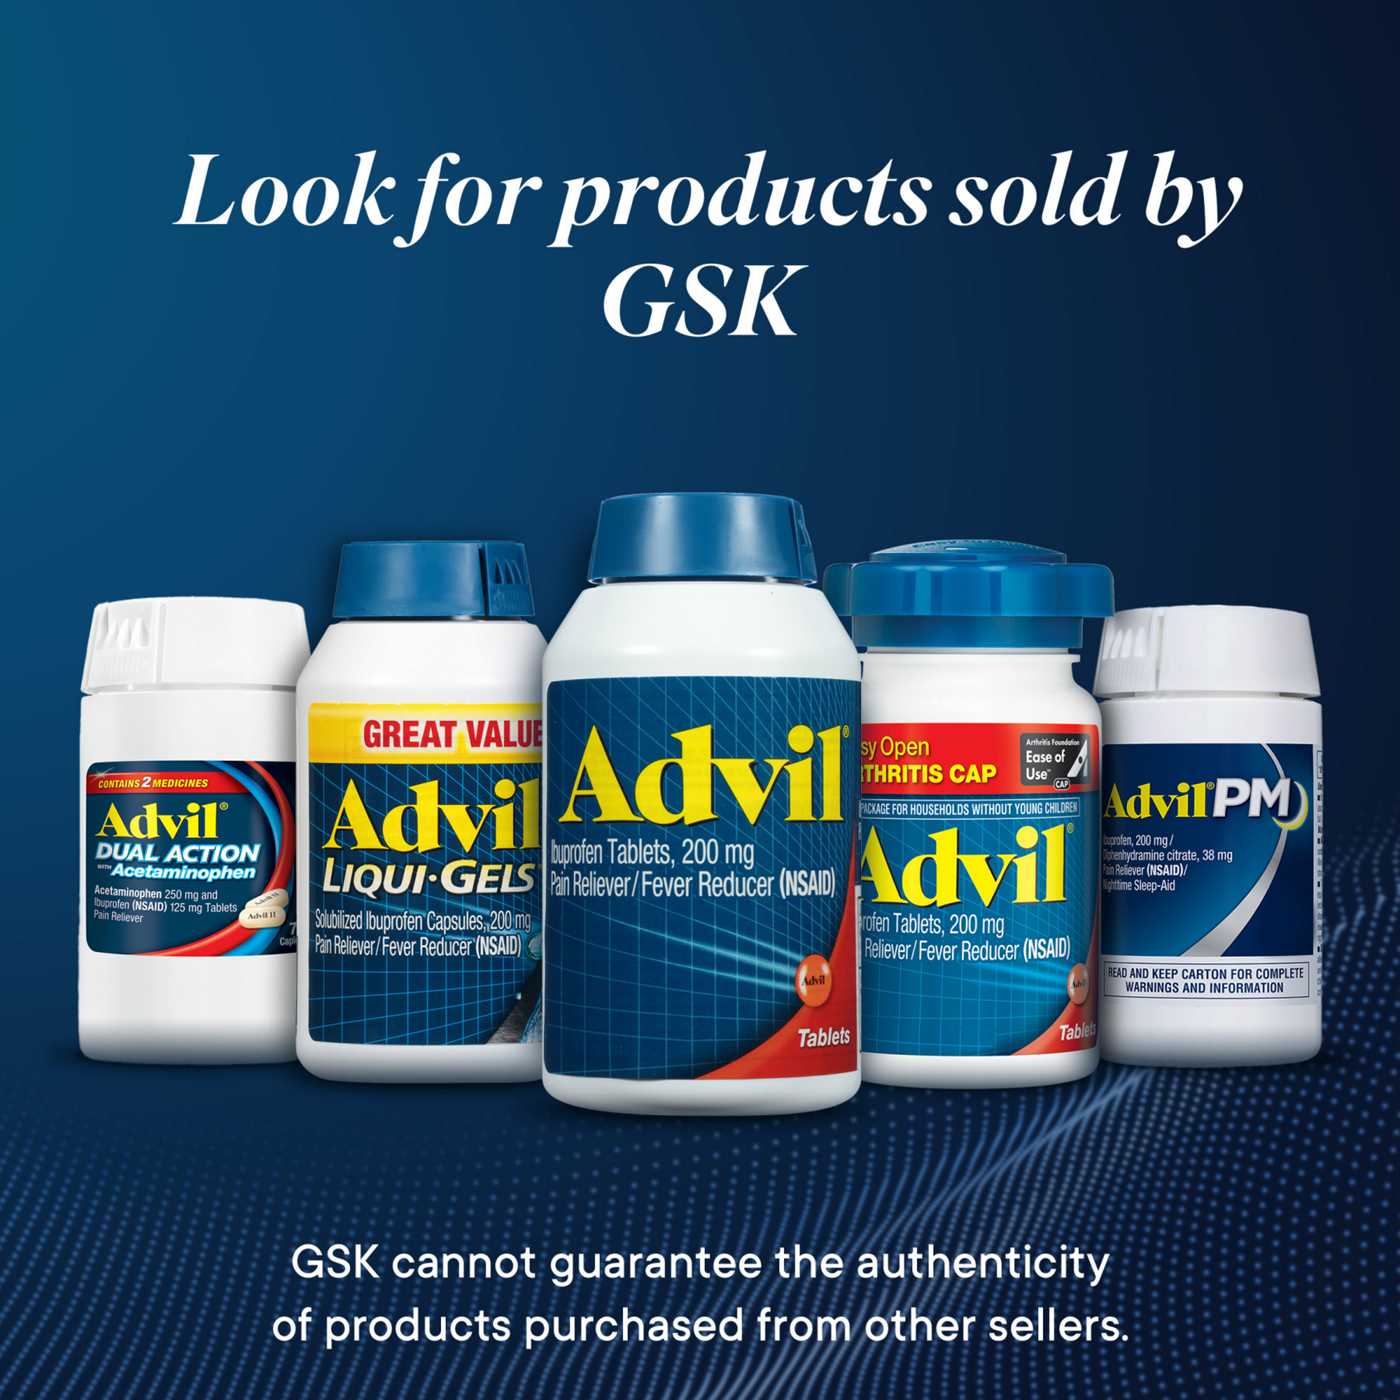 Advil Travel Size Ibuprofen 200 mg Coated Tablets Pocket Pack; image 8 of 10